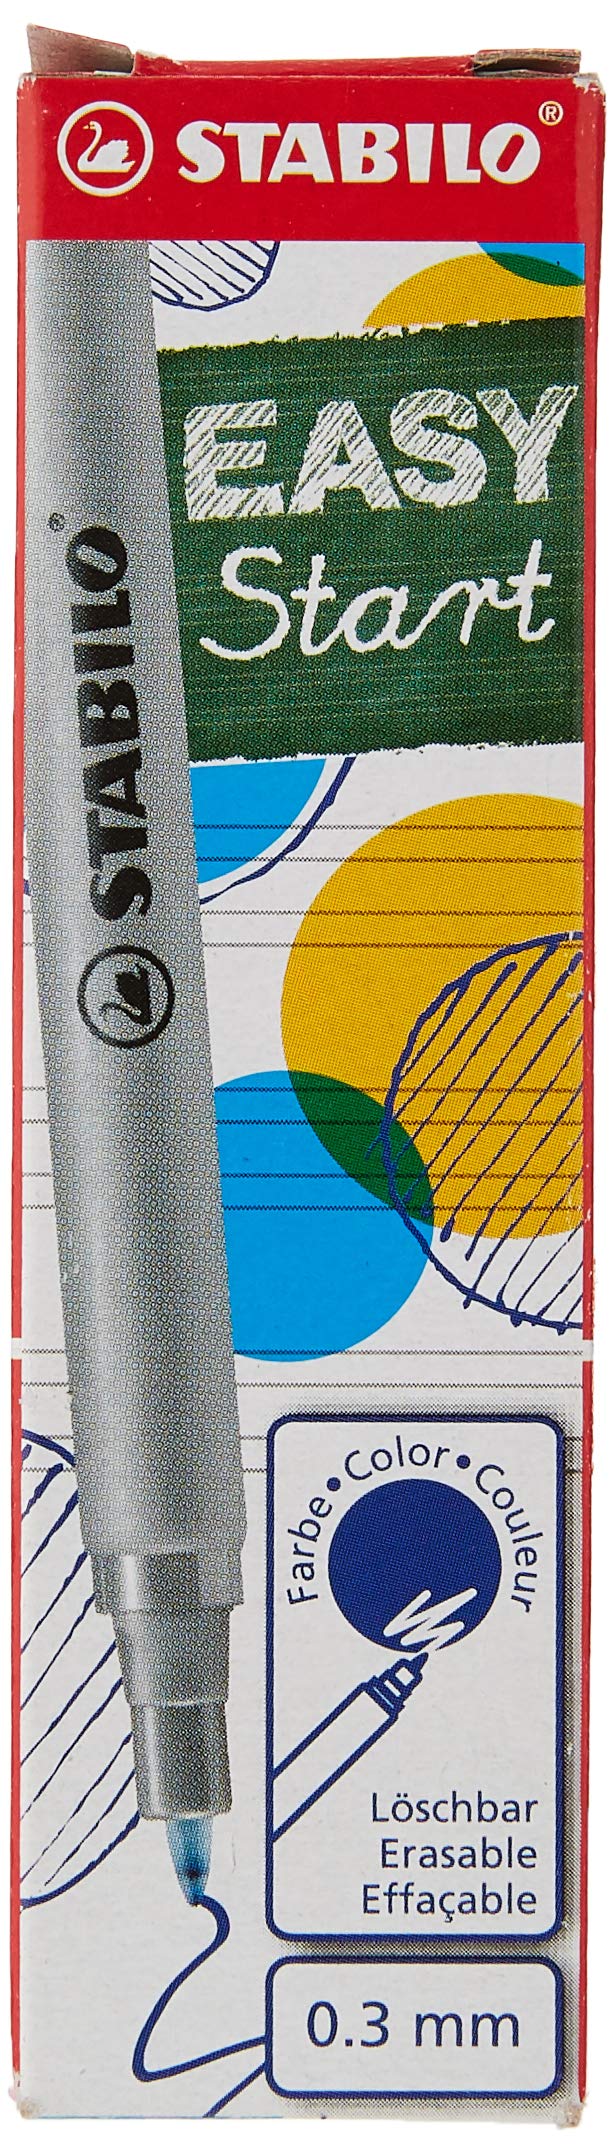 Refill per penna sferografica ergonomica Easyoriginal - punta fine - blu - Stabilo - scatola  3 pezzi